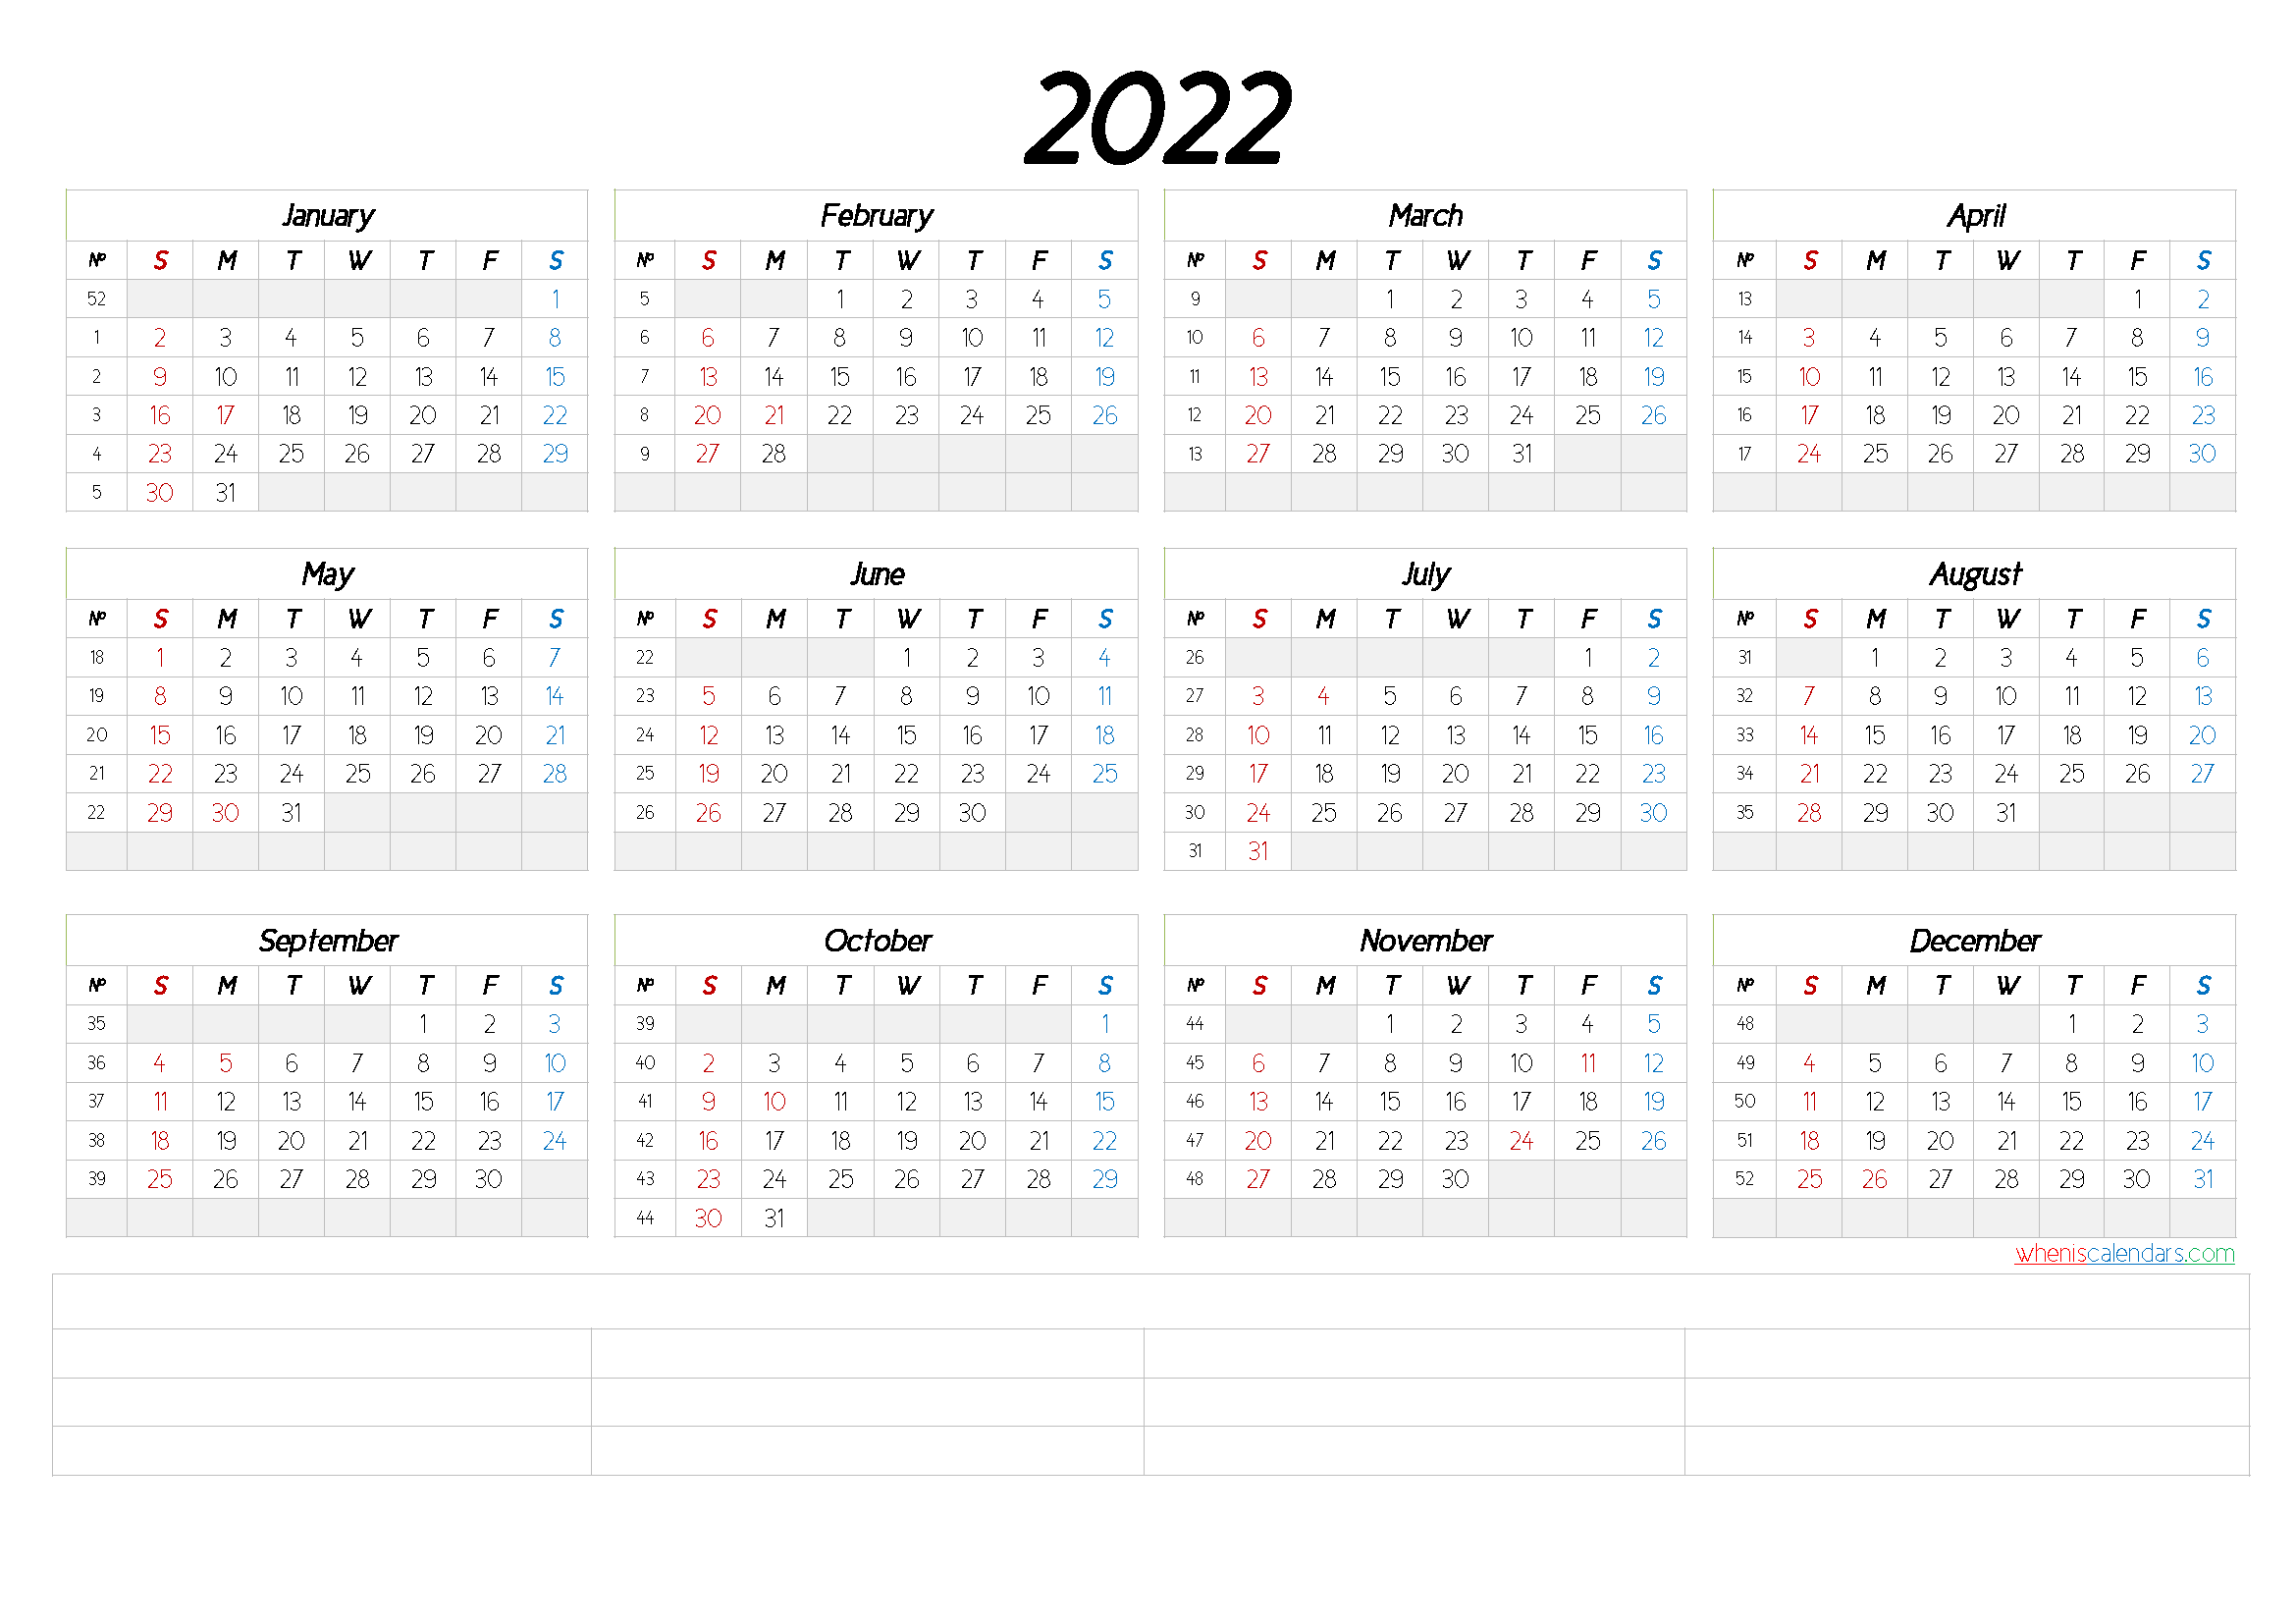 Printable Yearly Calendar 2022 Fullyear Free Printable